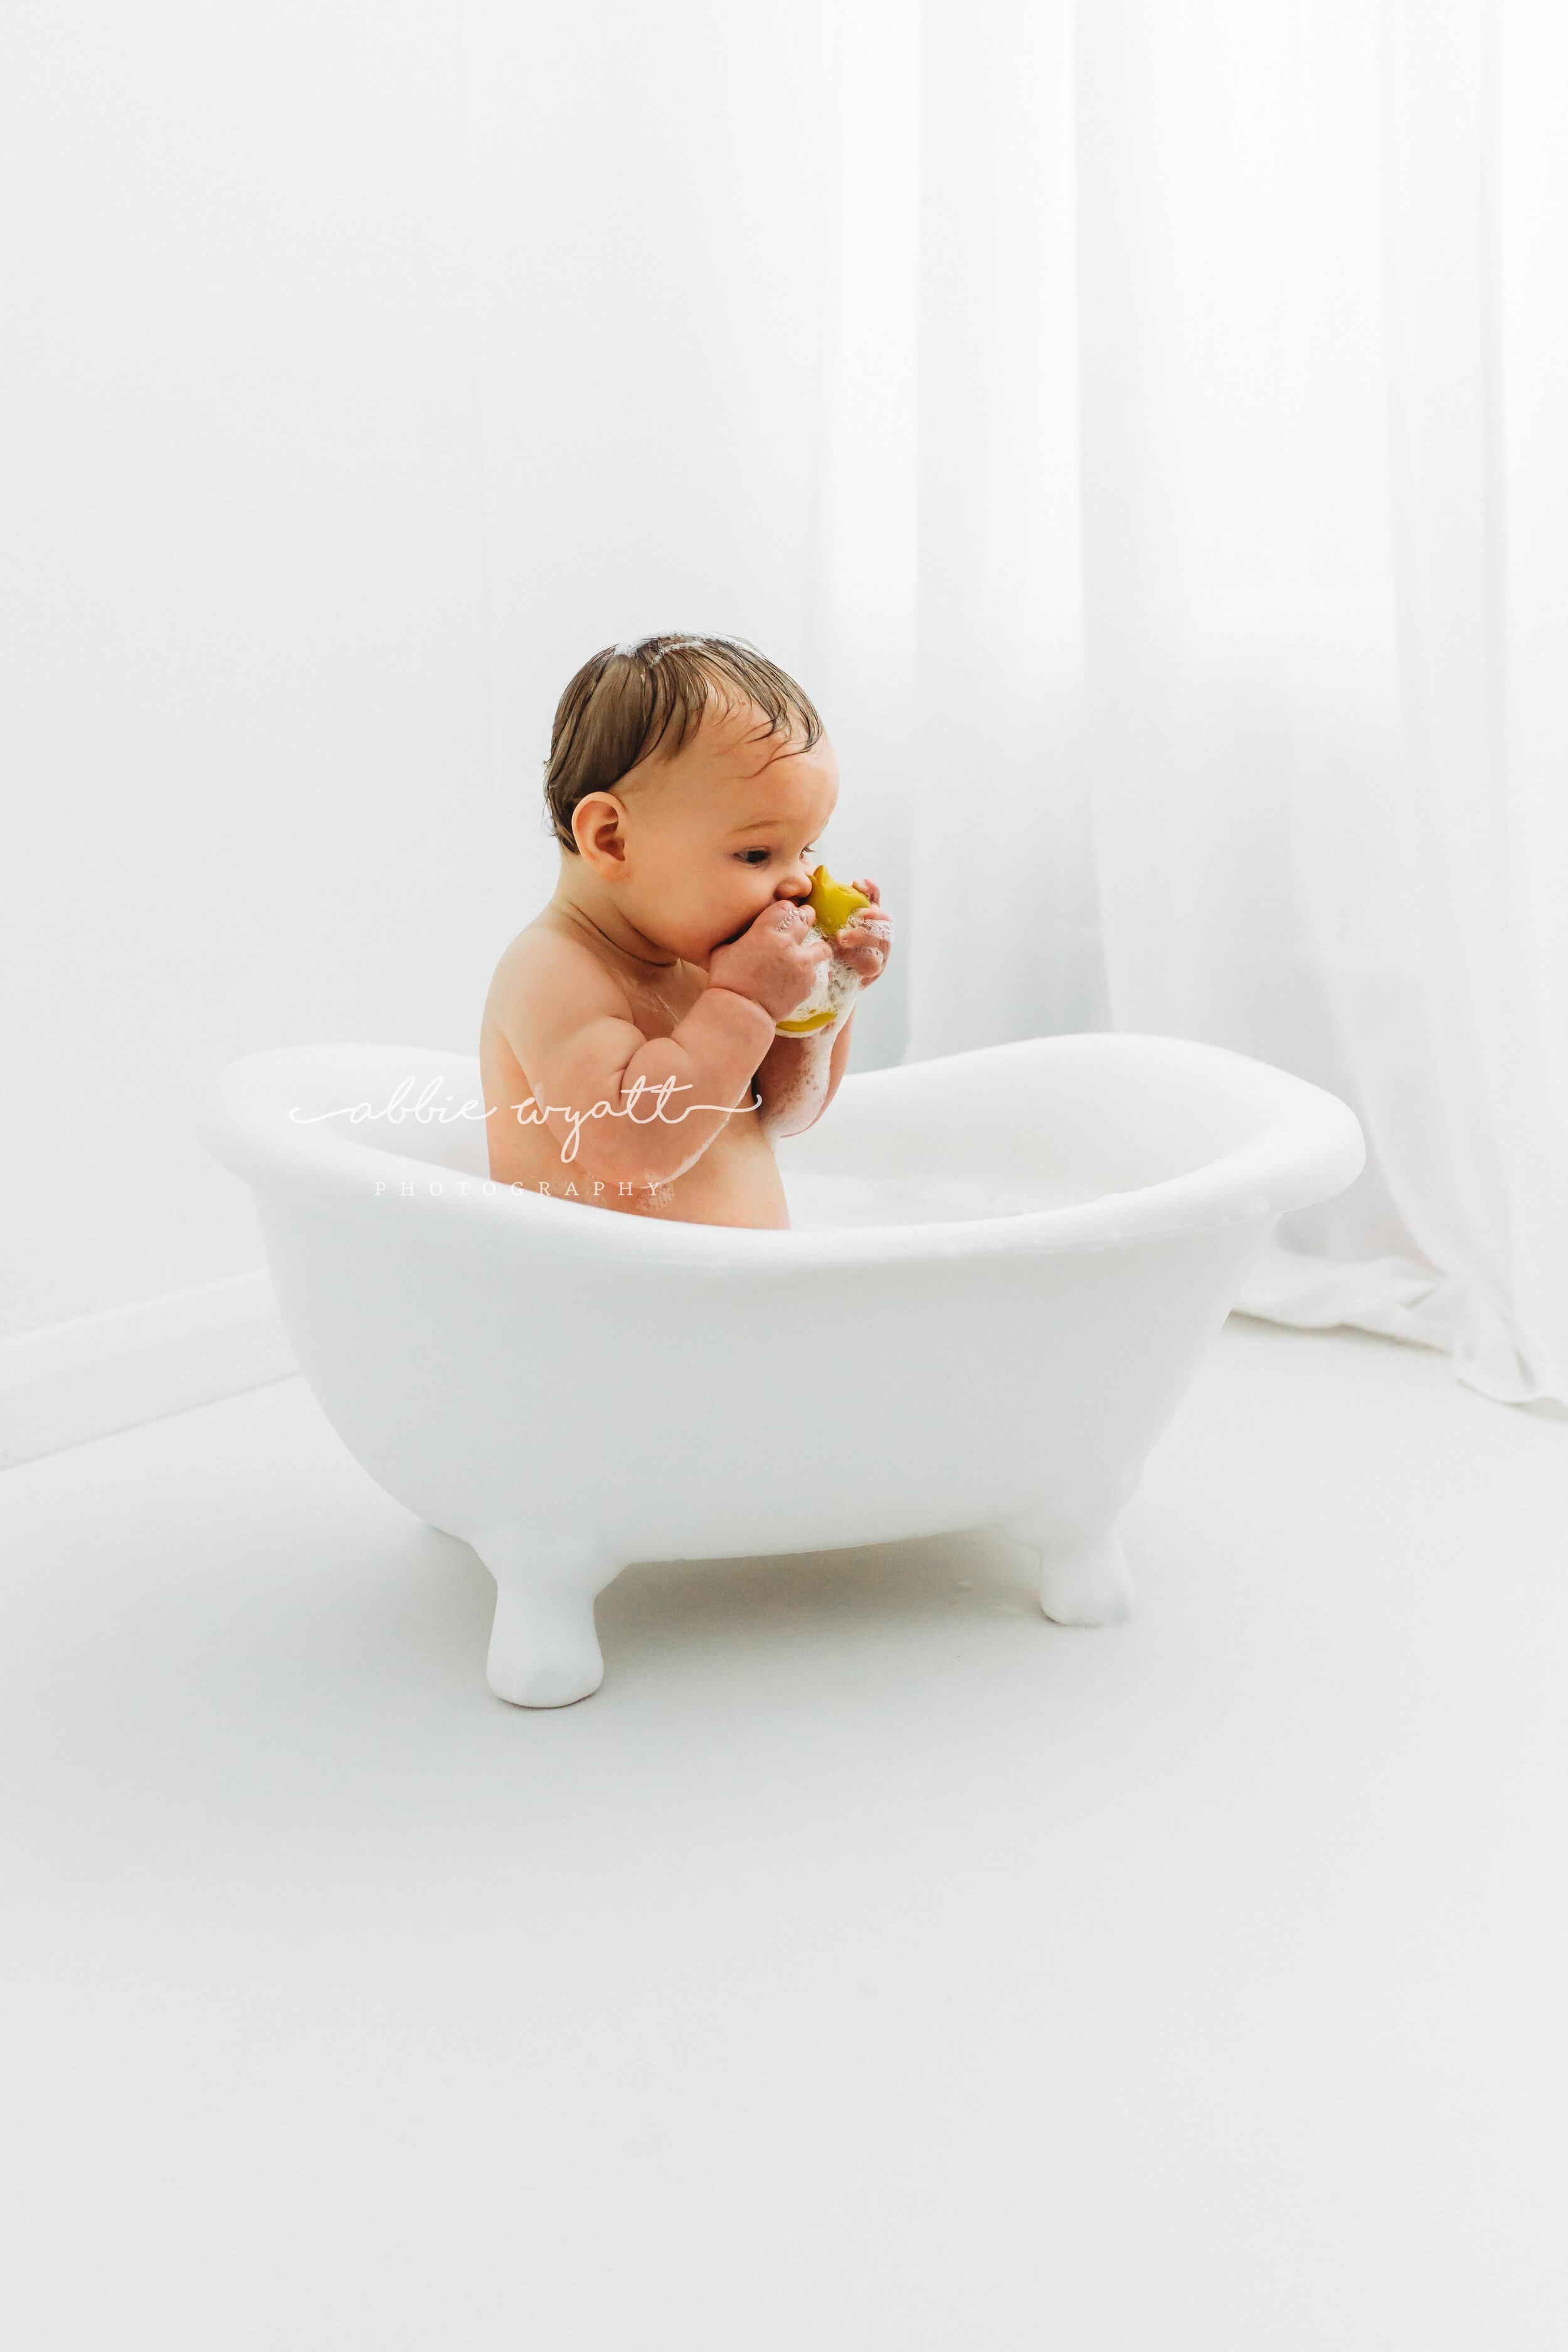 Abbie Wyatt Photography - Newborn, Baby & Cake Smash Photographer - Hemel Hempstead 12.jpg